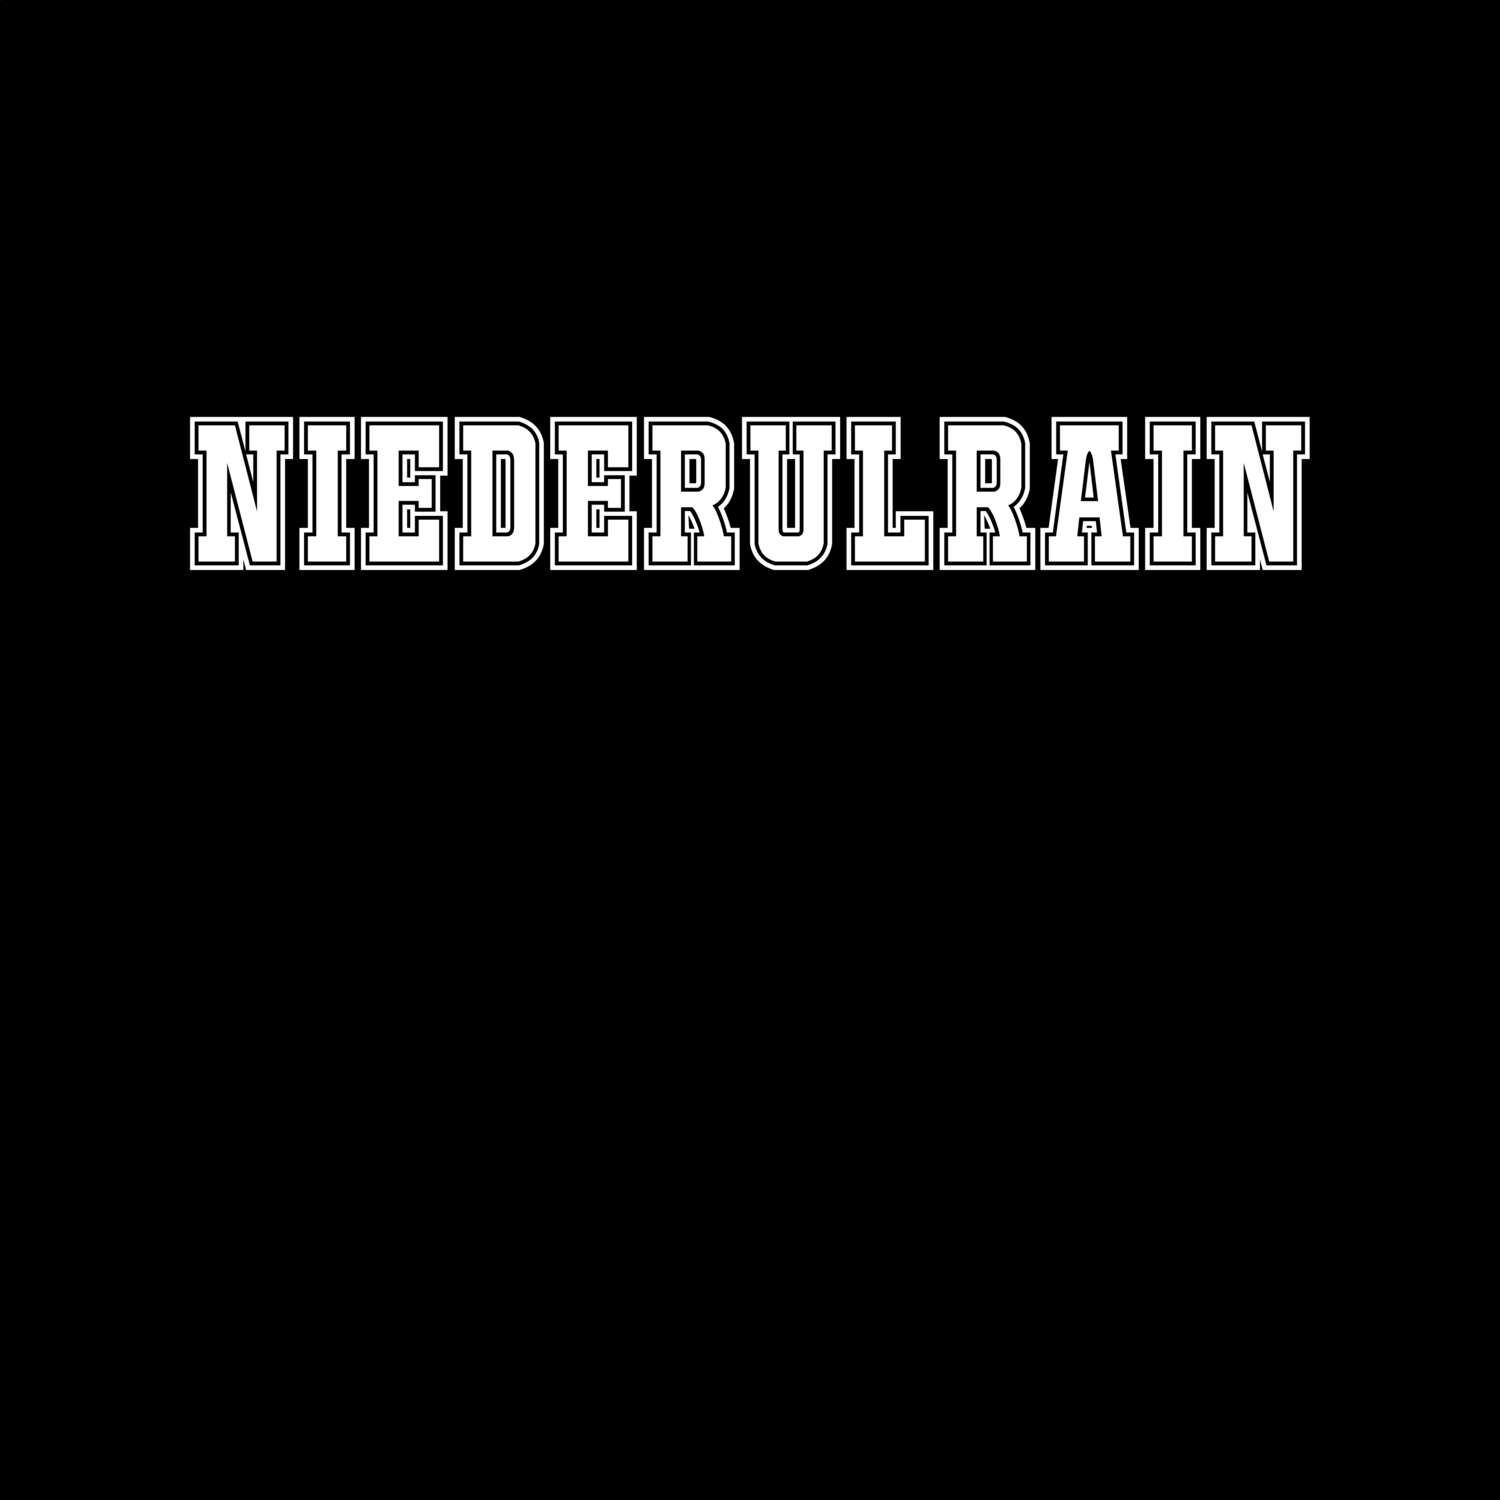 Niederulrain T-Shirt »Classic«